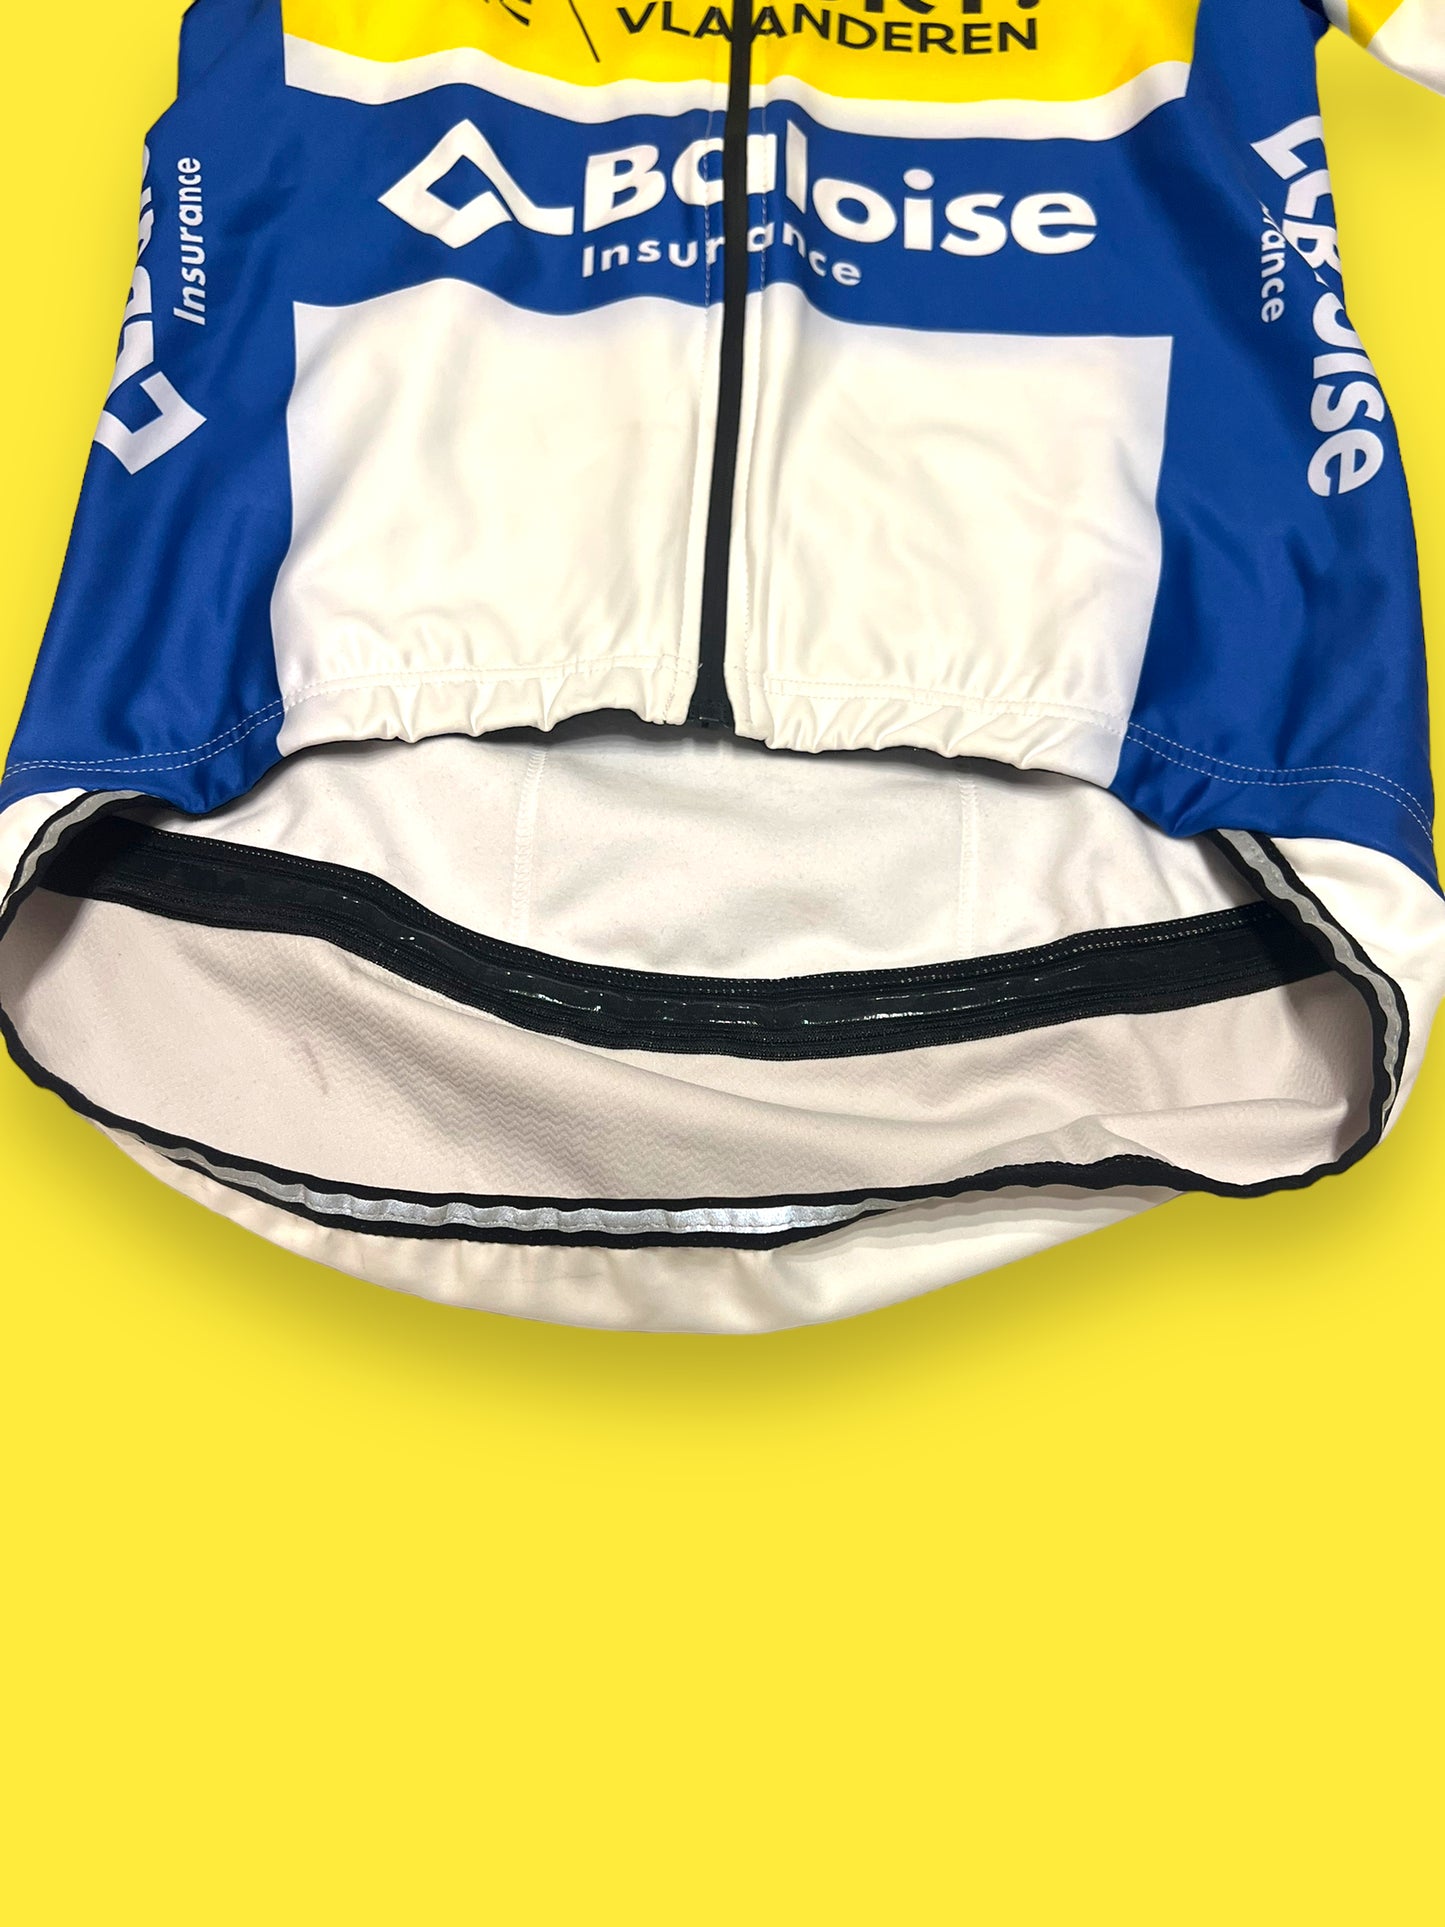 Short Sleeve Gabba Jersey Water-Resistant | Vermarc | Sport Vlaanderen / Baloise | Pro Cycling Kit